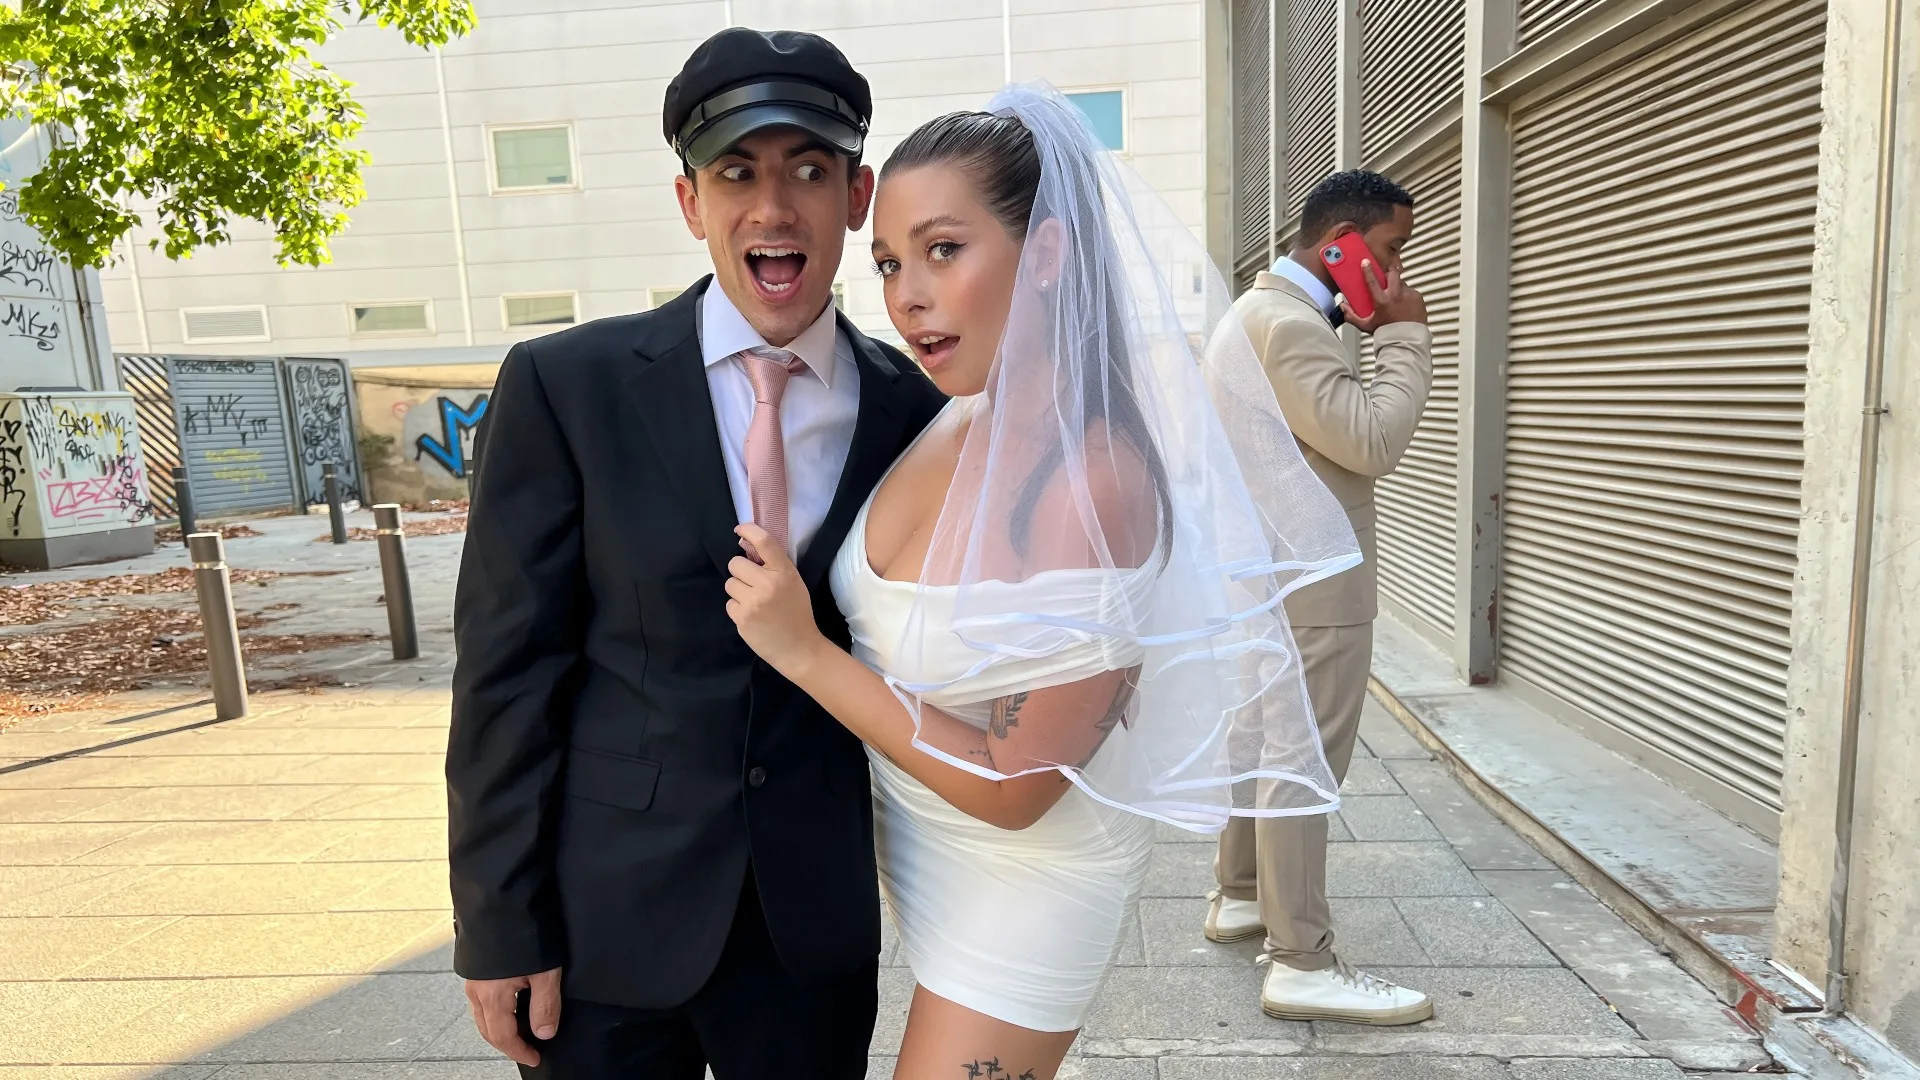 Chauffeur Fucks The Bride - Sneaky Sex